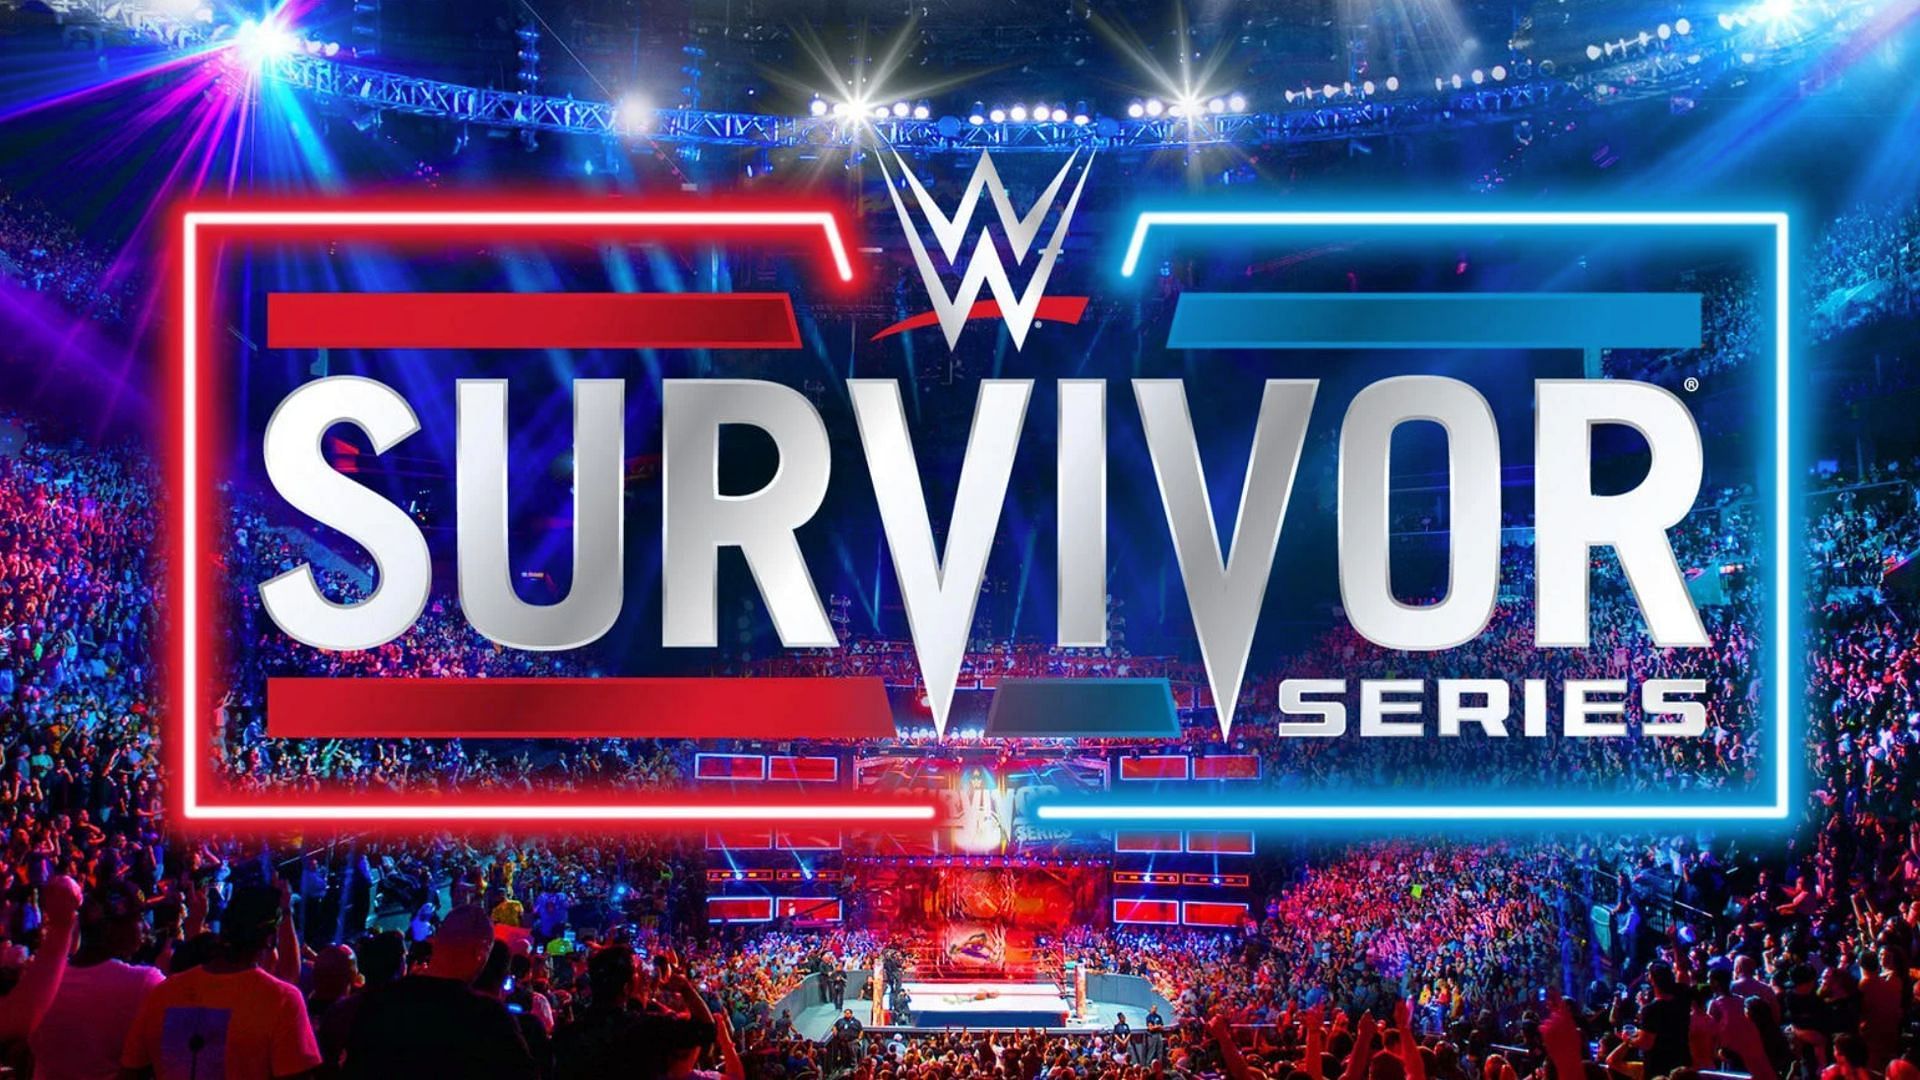 WWE Survivor Series 2022 will take place in Boston, MA.